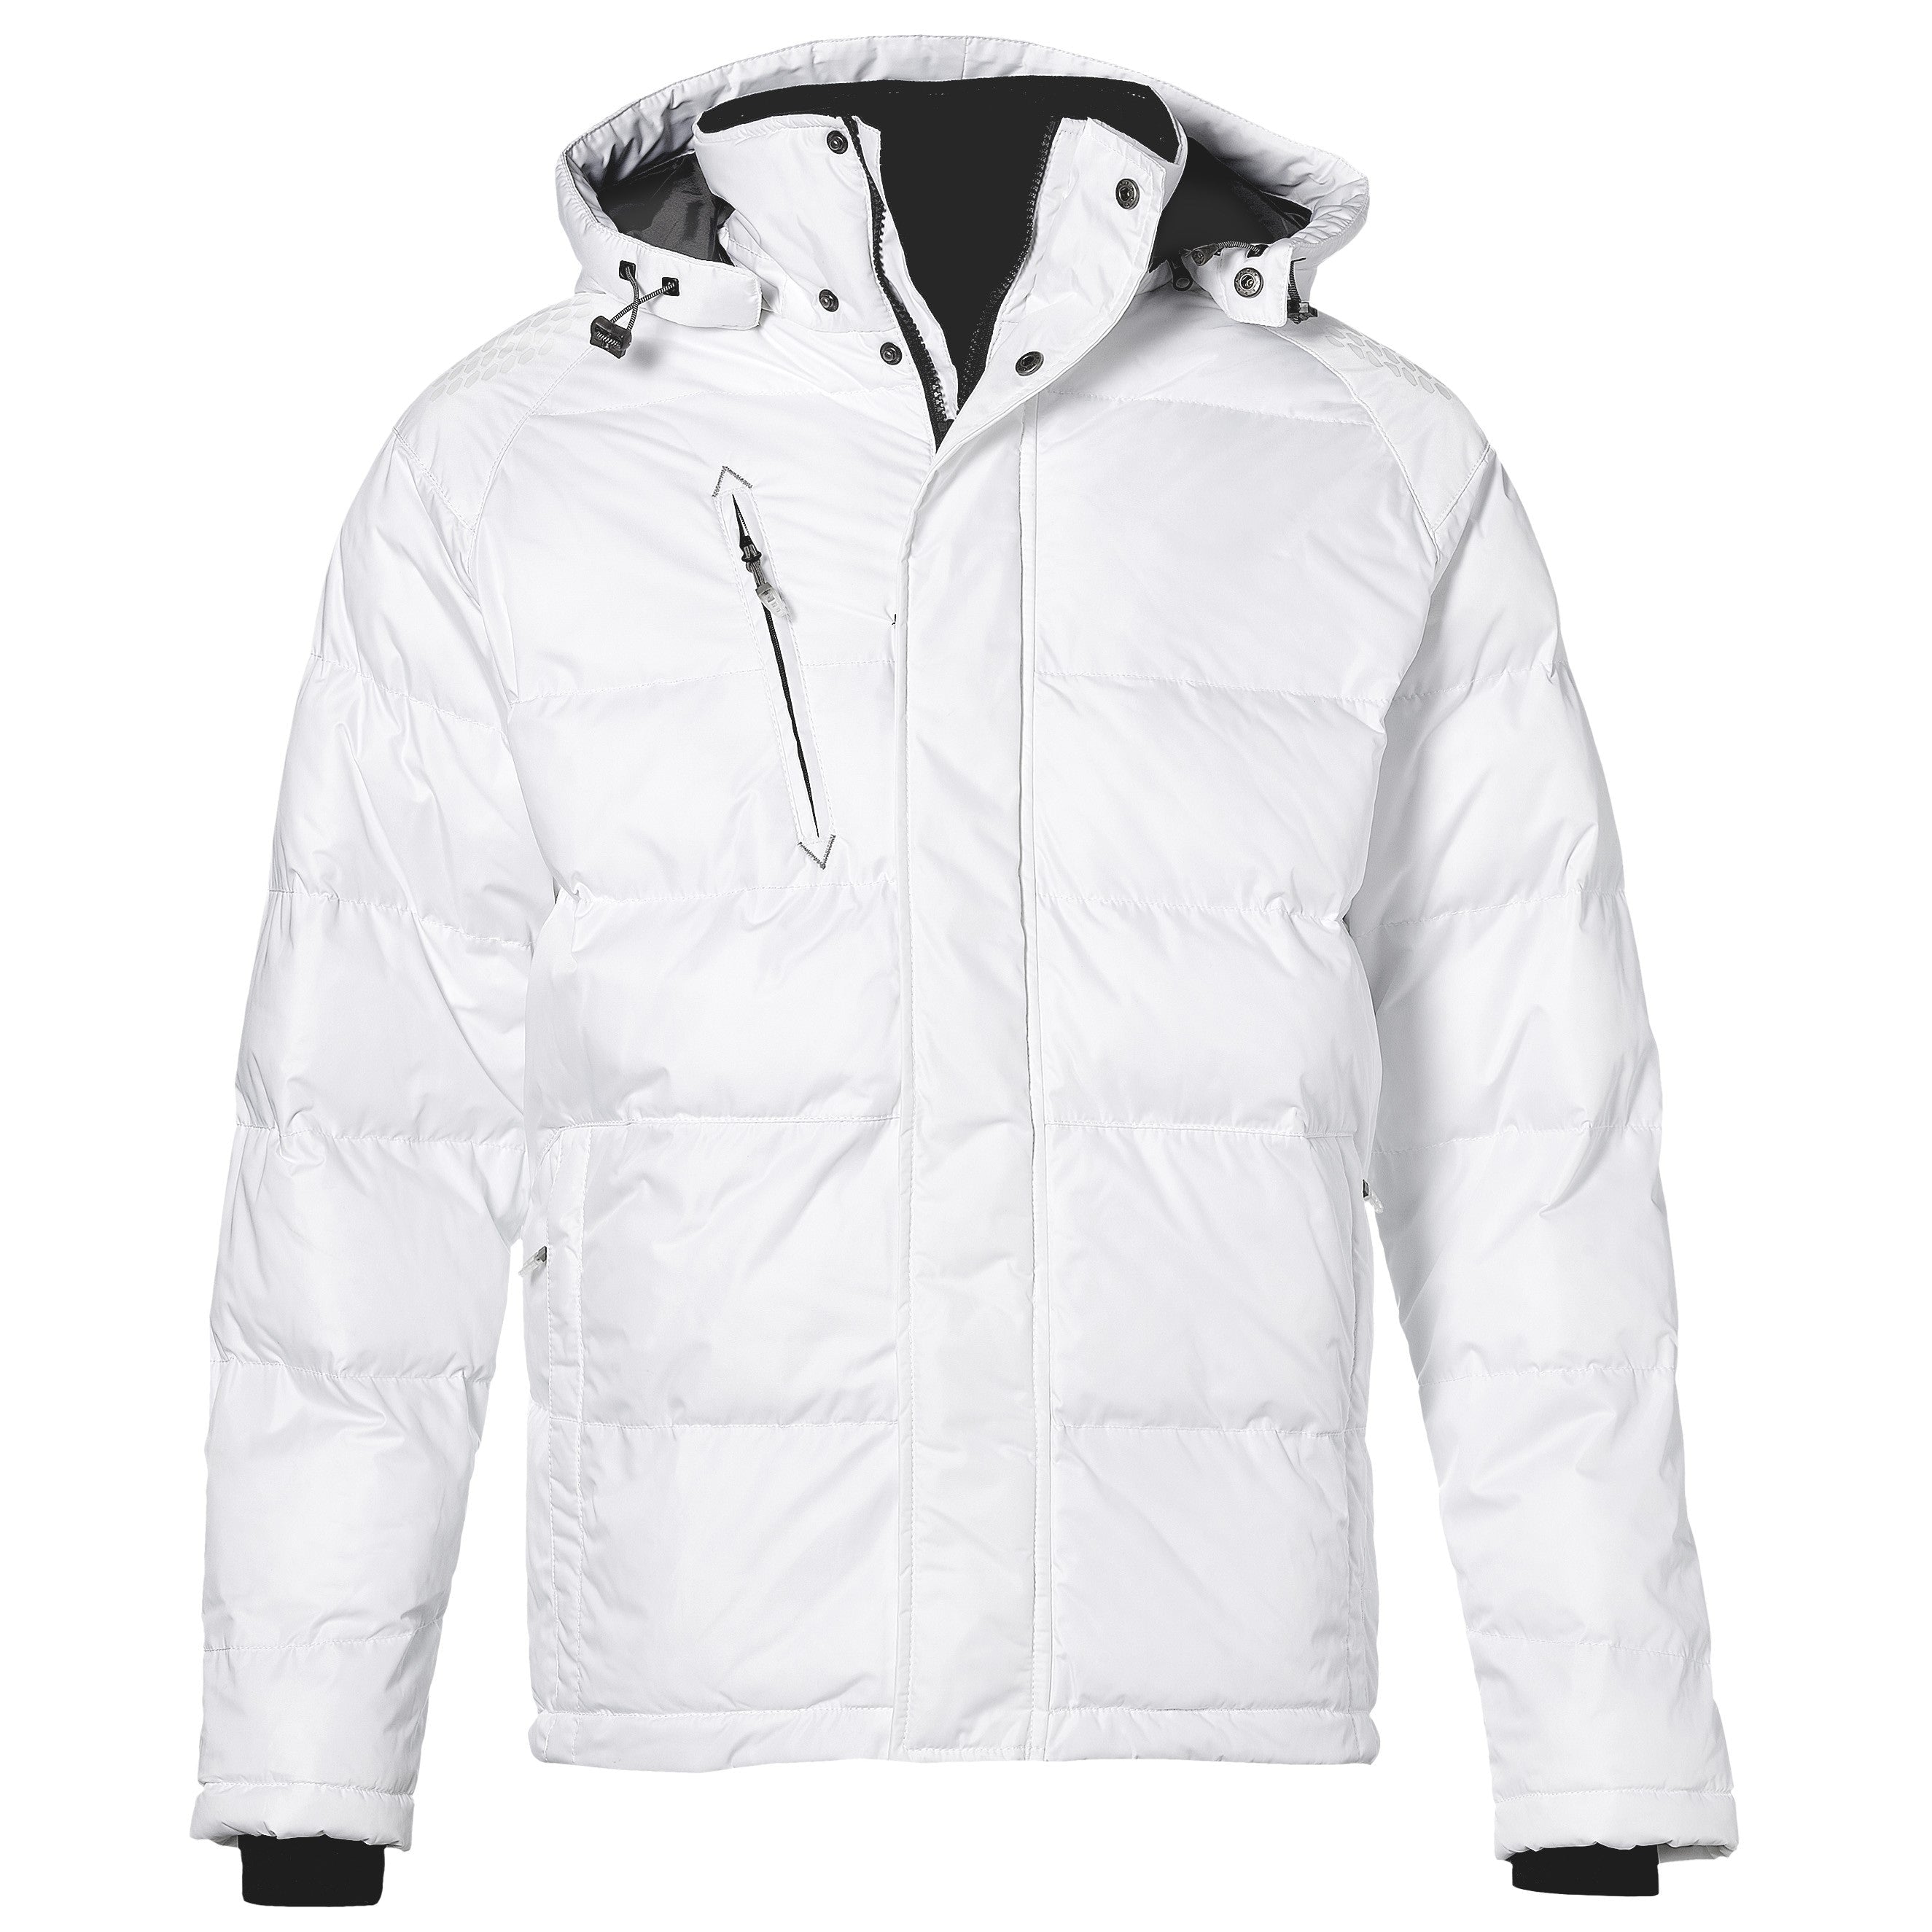 Mens Balkan Insulated Jacket-Coats & Jackets-2XL-White-W